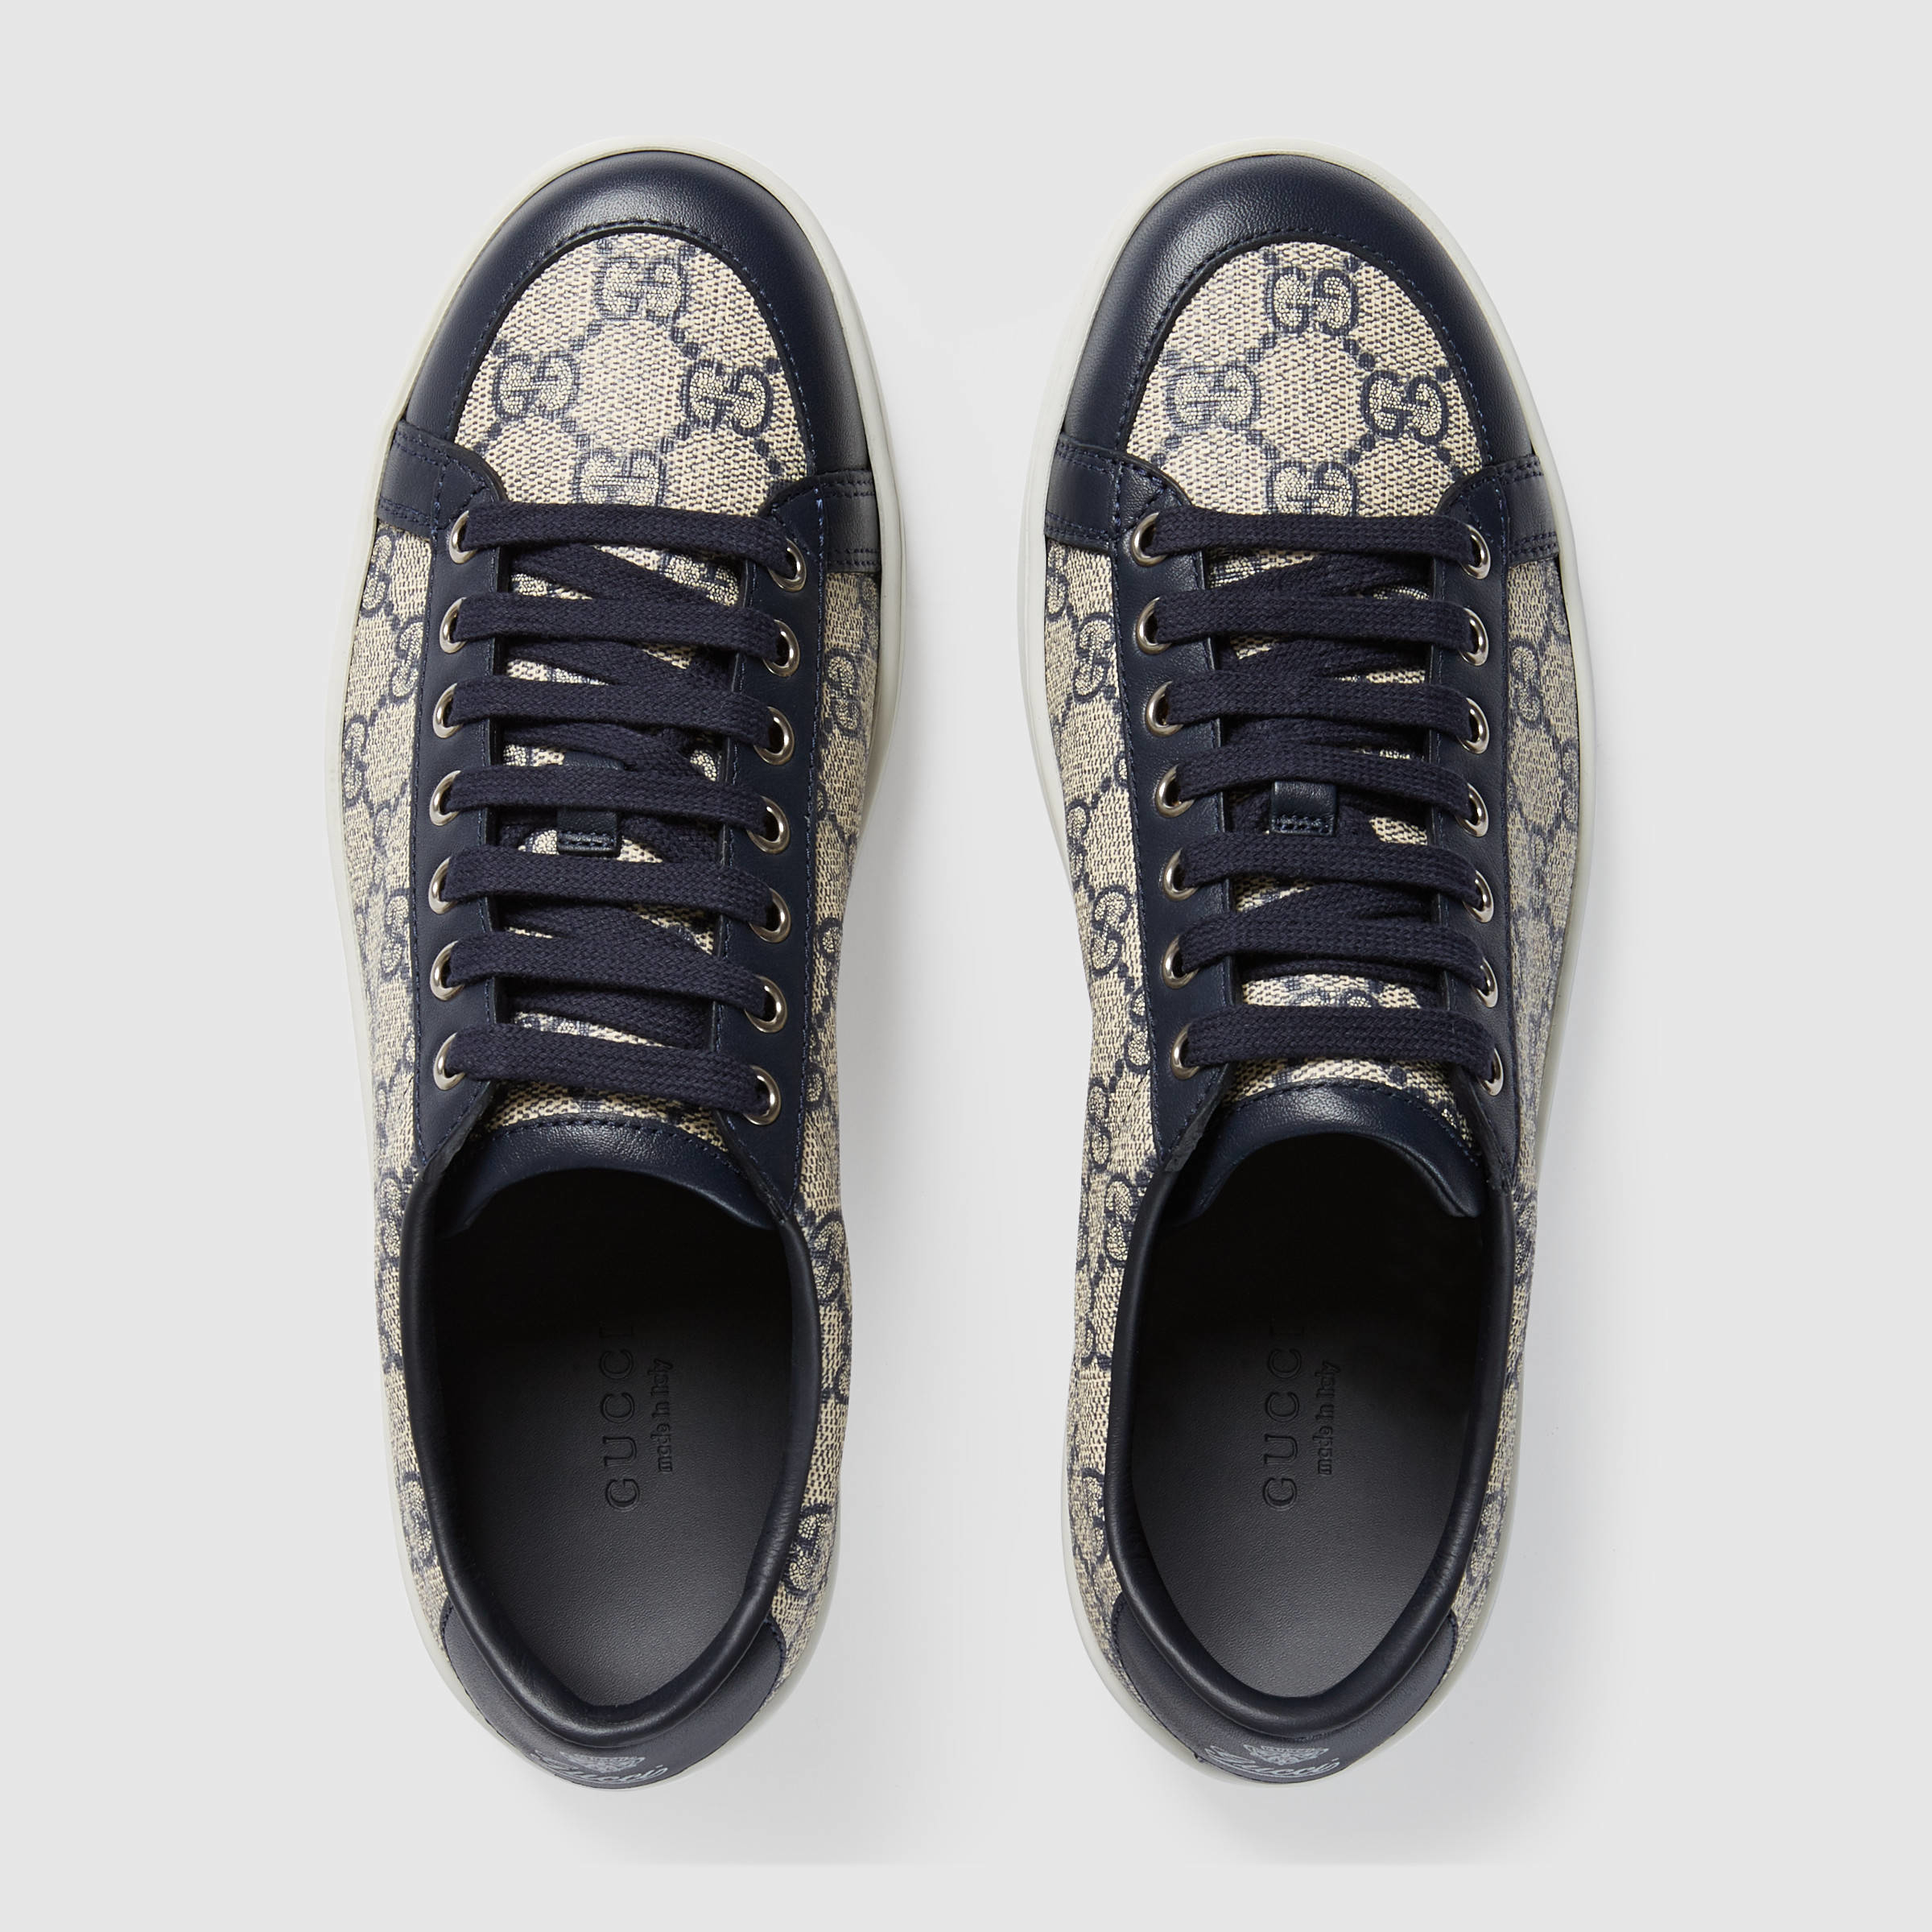 Lyst - Gucci Brooklyn GG Supreme Sneaker in Blue